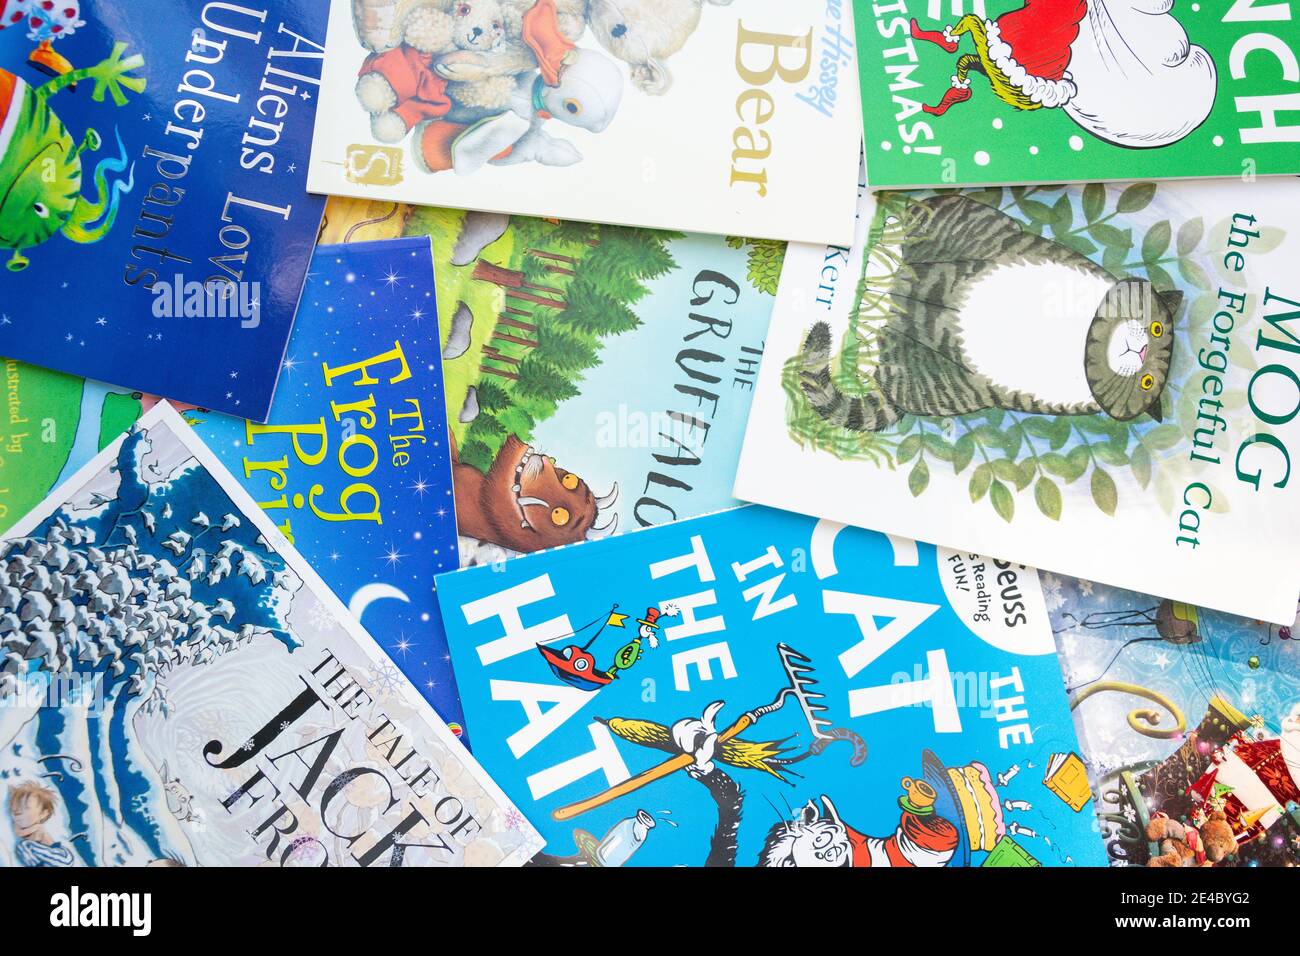 Selección de libros infantiles populares, Stanwell Moor, Surrey, Inglaterra, Reino Unido Foto de stock